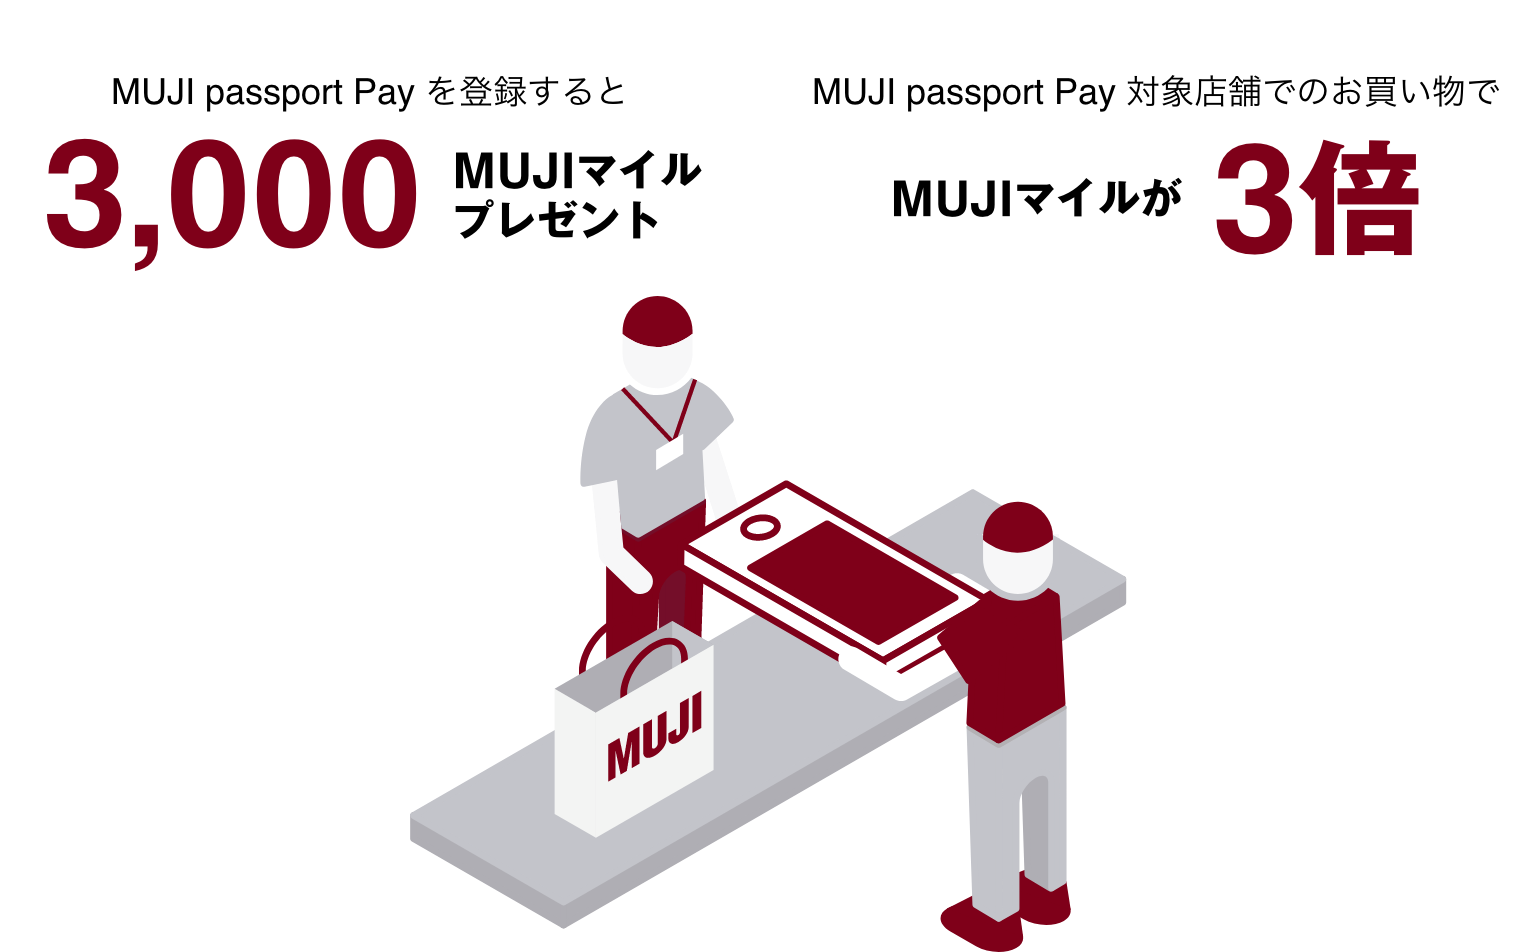 「MUJI passport Pay を登録すると、3,000MUJIマイルプレゼント。MUJI passport Pay 対象店舗でのお買い物で、MUJIマイルが3倍。」